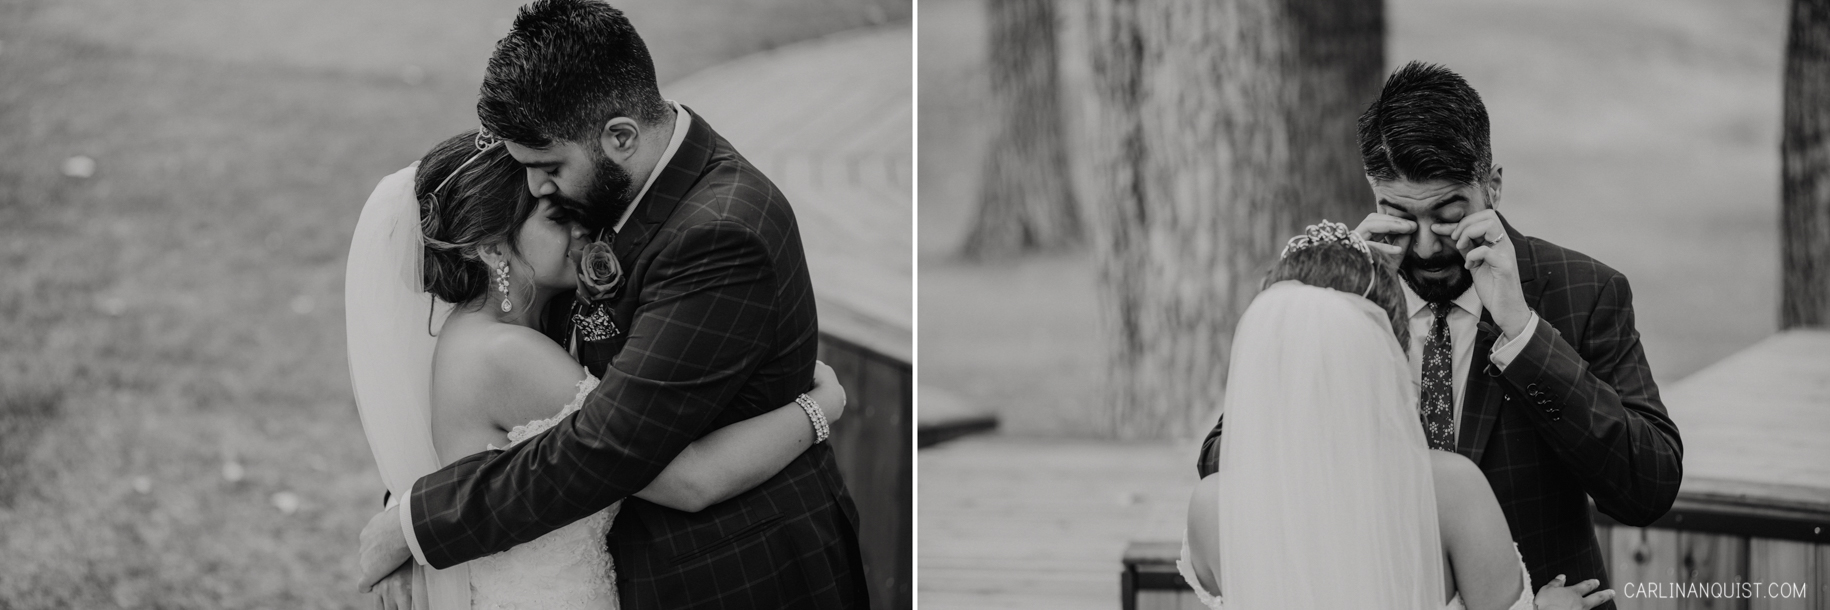 Exchanging Vows - Bride & Groom Portraits - Catholic/Sikh Wedding Photographer Calgary